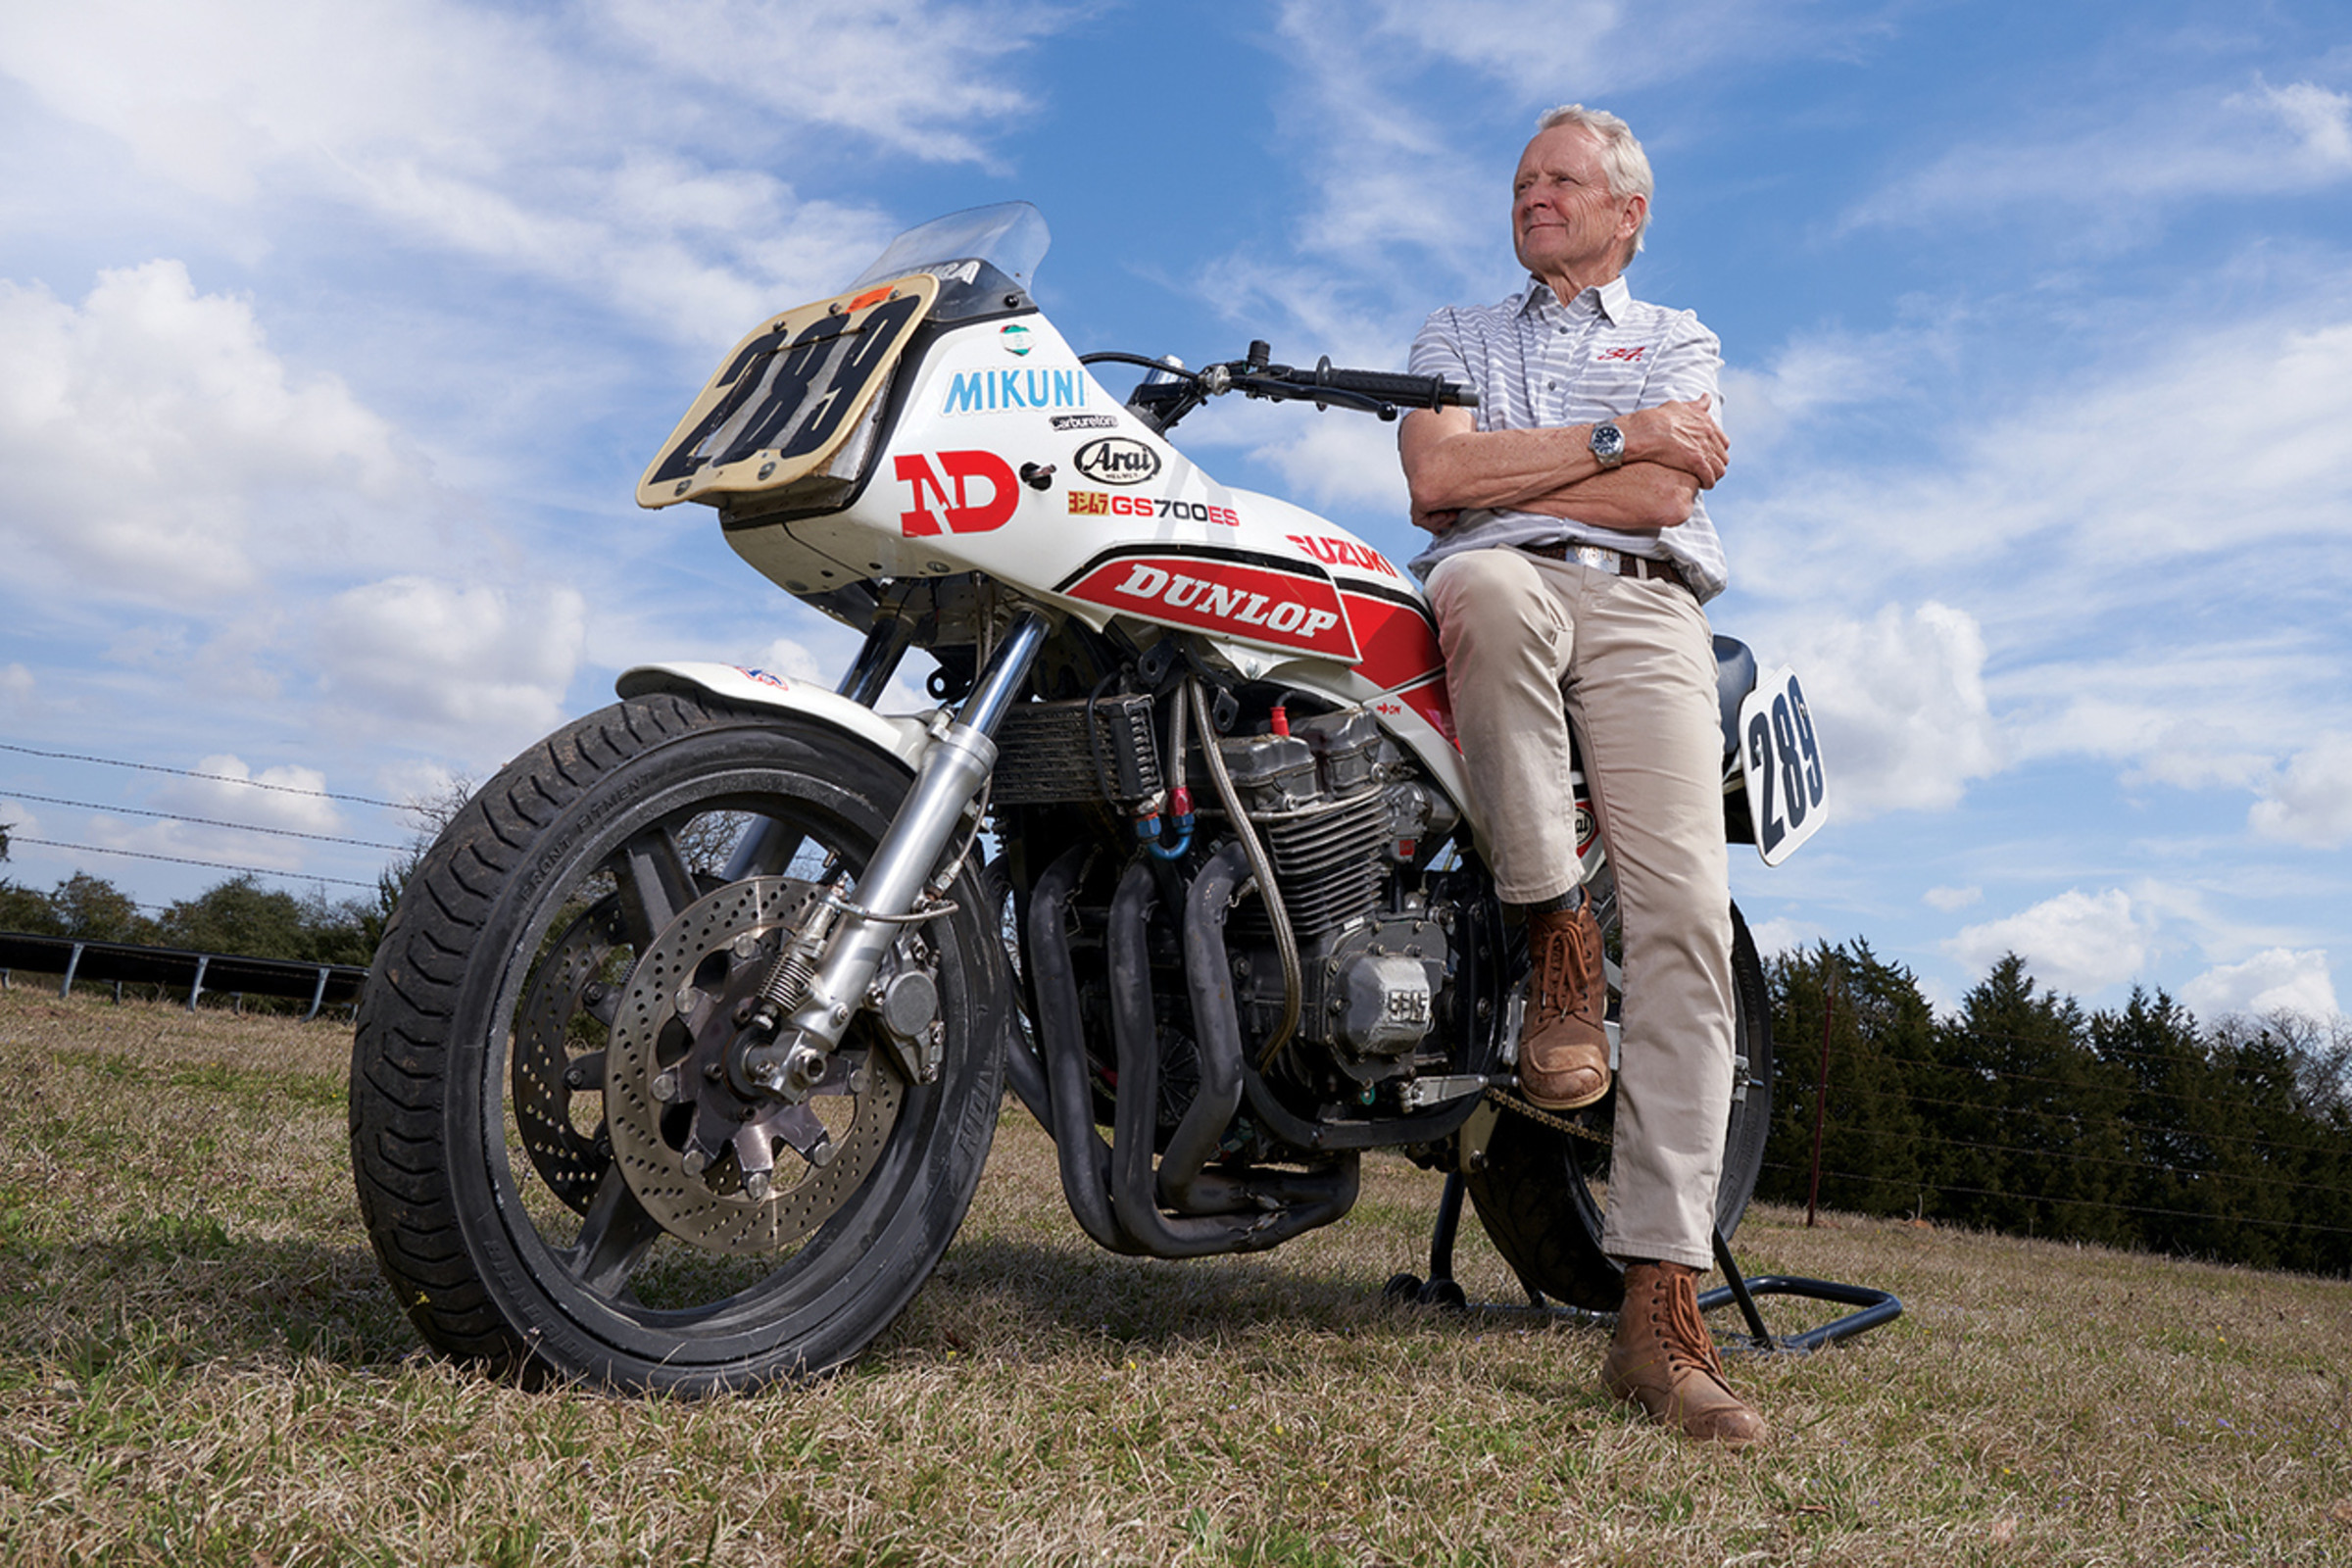 Kevin Schwantz Named Grand Marshal of 2022 AMA Vintage Motorcycle Days